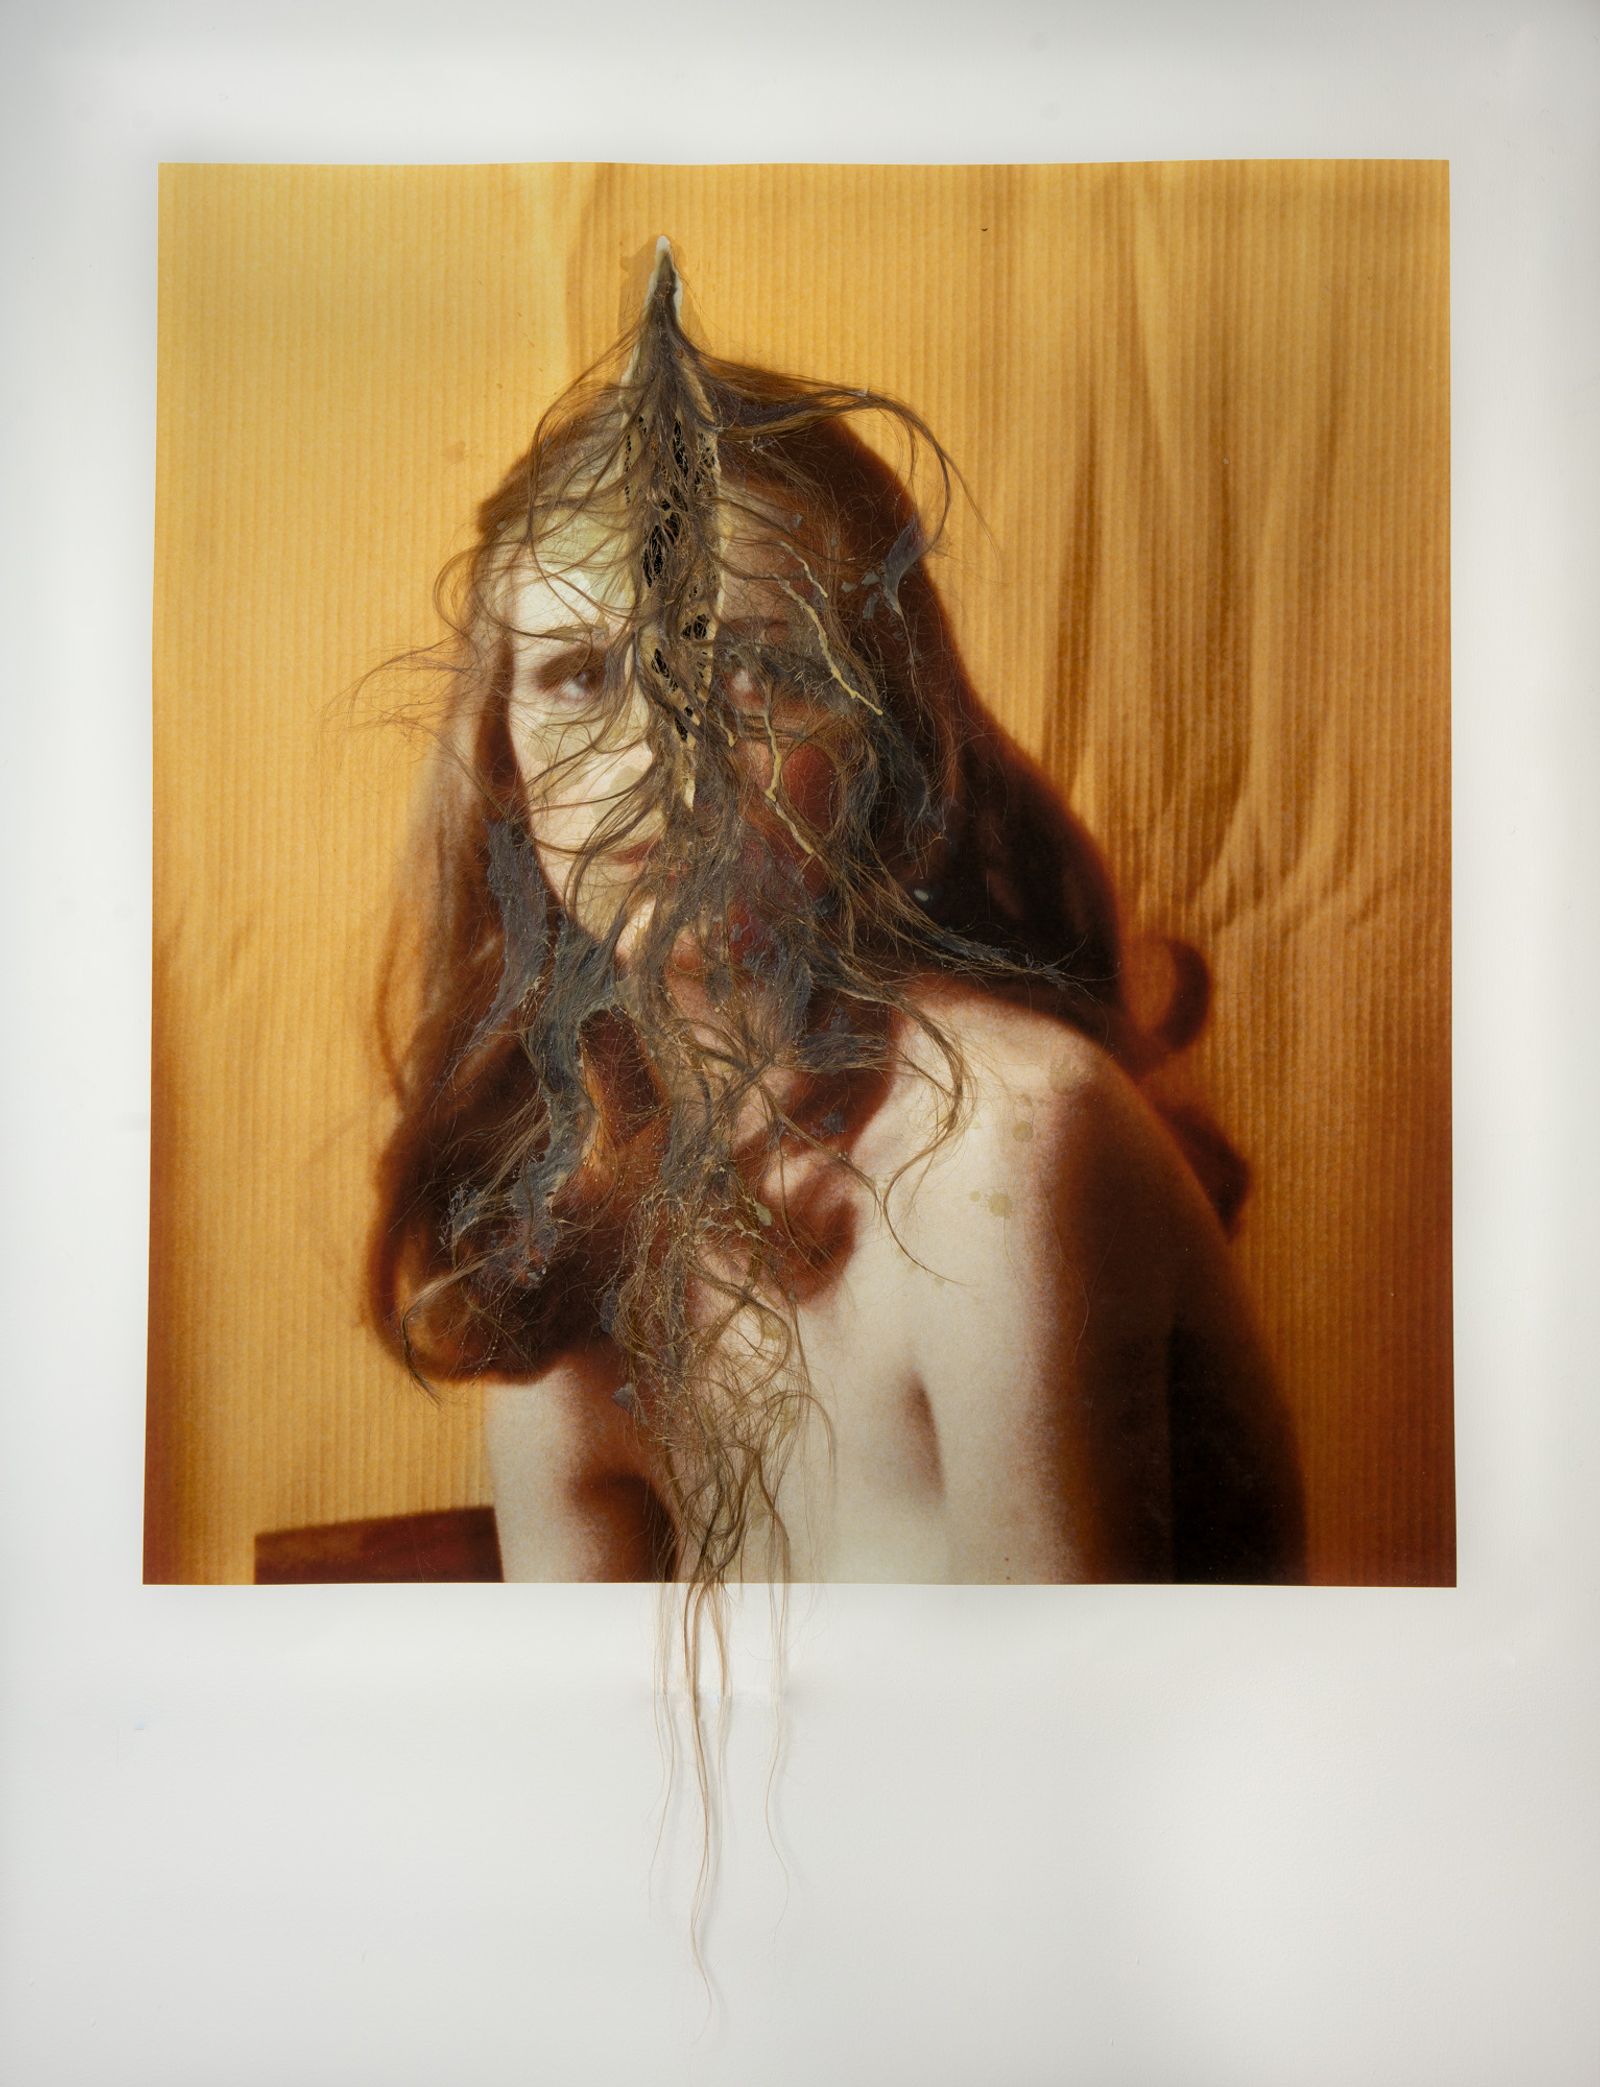 © Elizabeth Hibbard - Archival inkjet print, beeswax, human hair